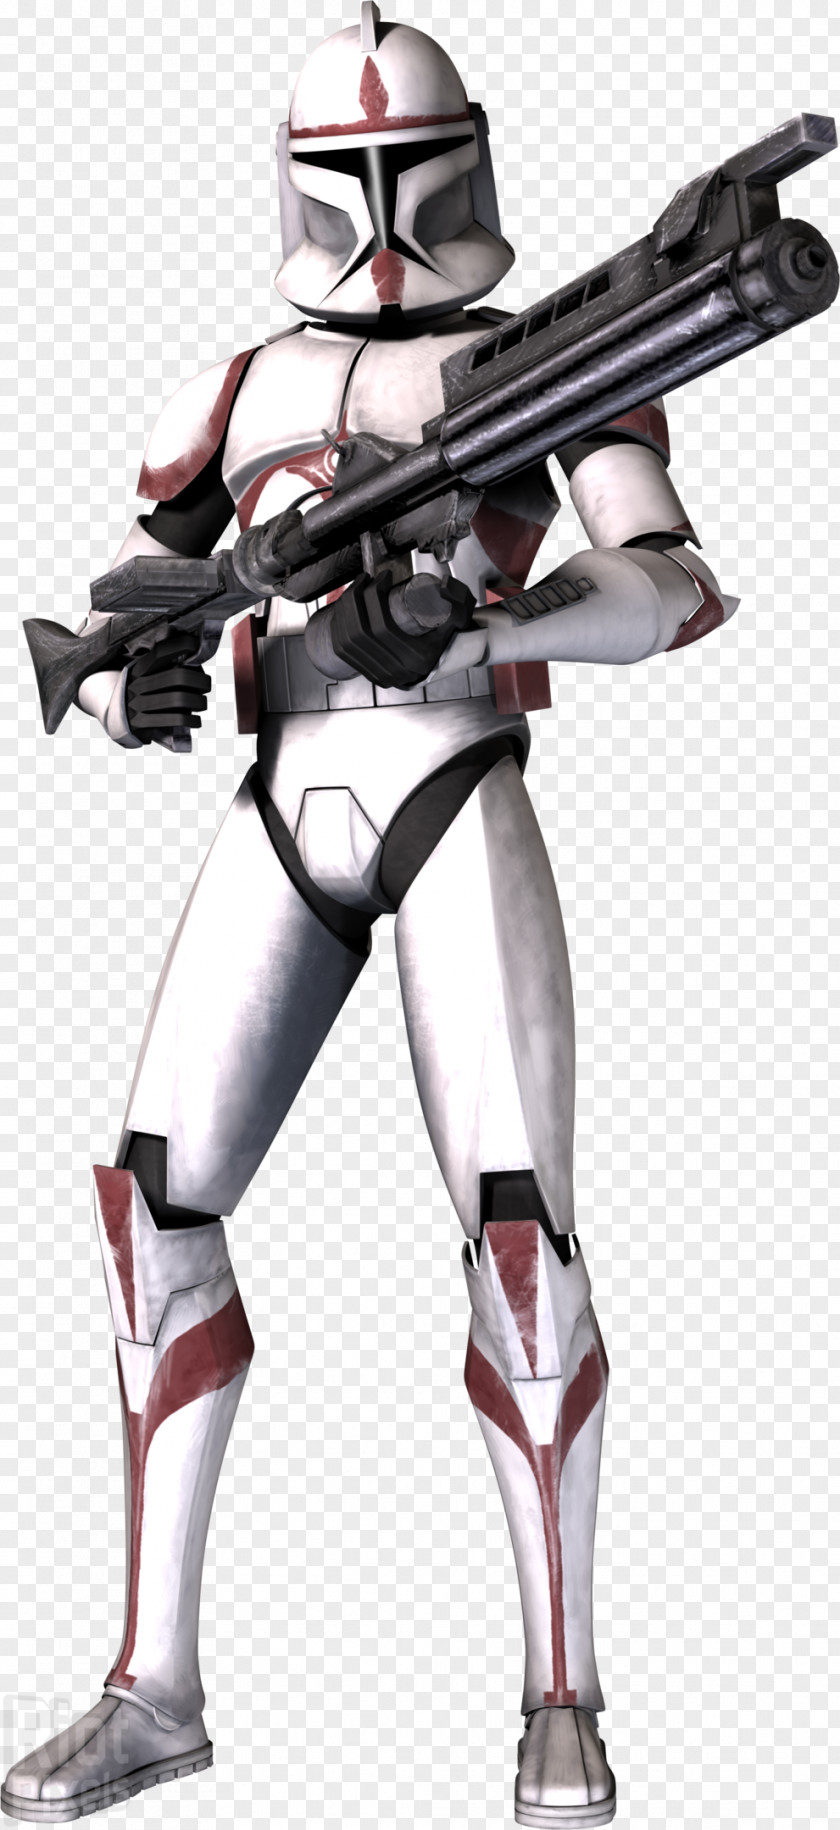 Star Wars Clone Trooper Wars: The Captain Rex Commander Cody PNG